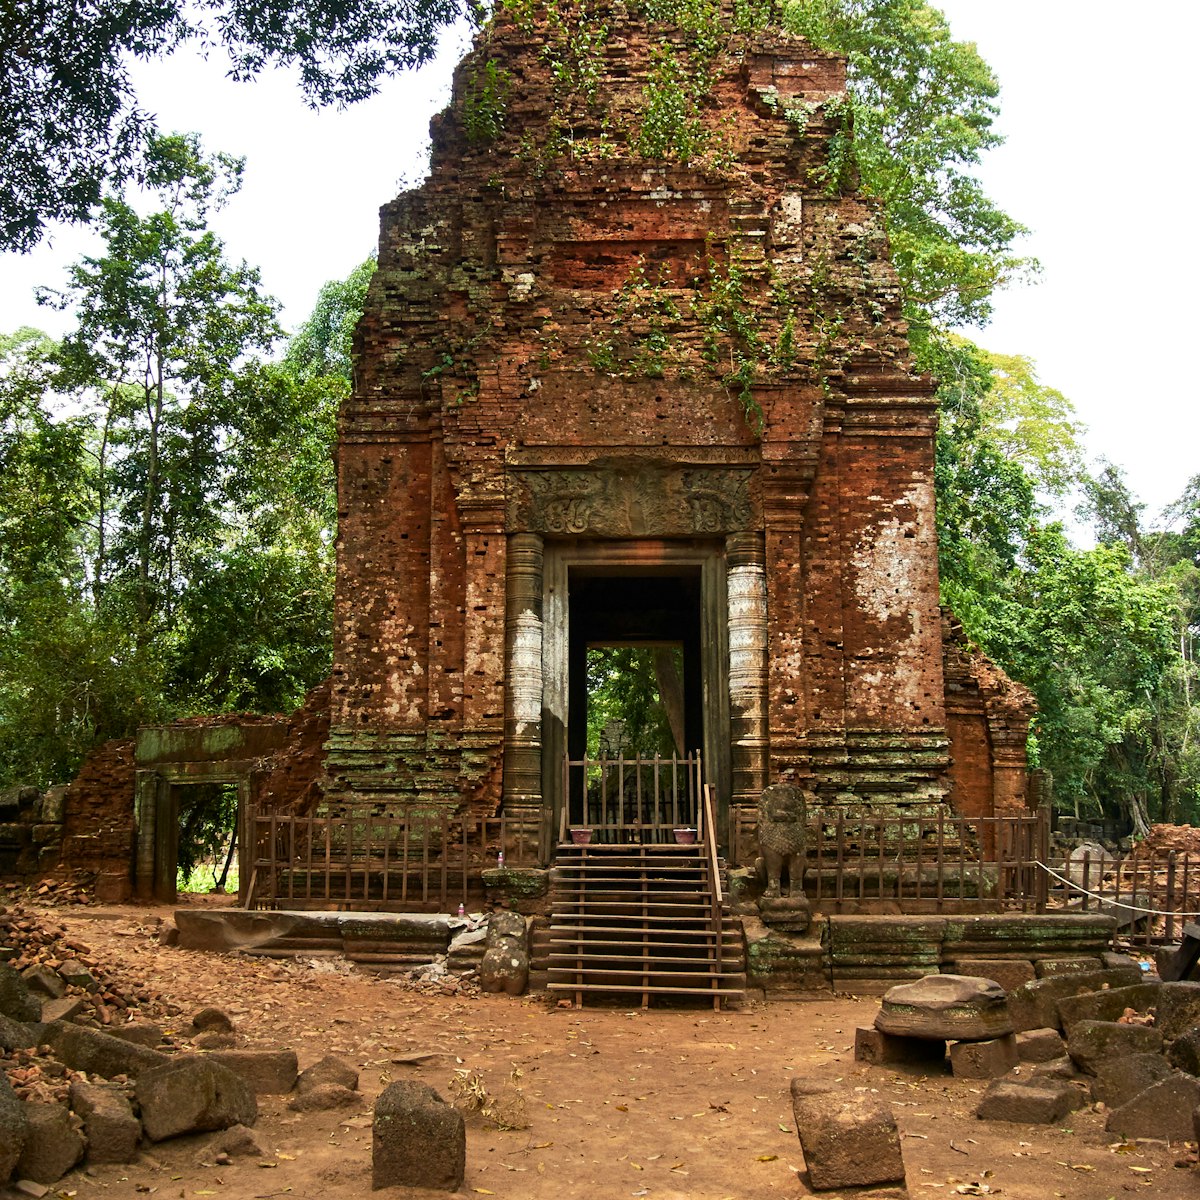 An overgrown ruin in Koh Ker.
1078808336
prasat, thom, ancient, angkor, angkor wat, architecture, art, asia, asian, buddha, buddhism, buddhist, building, cambodia, cambodian, culture, dawn, face, heritage, hindu, hinduism, historical, india, khmer, lake, landmark, laos, meditation, nature, old, pagoda, prayer, reap, religion, religious, ruin, shiva, siam, siem, siem reap, statue, stone, sunrise, sunset, temple, tower, travel, unesco, wat